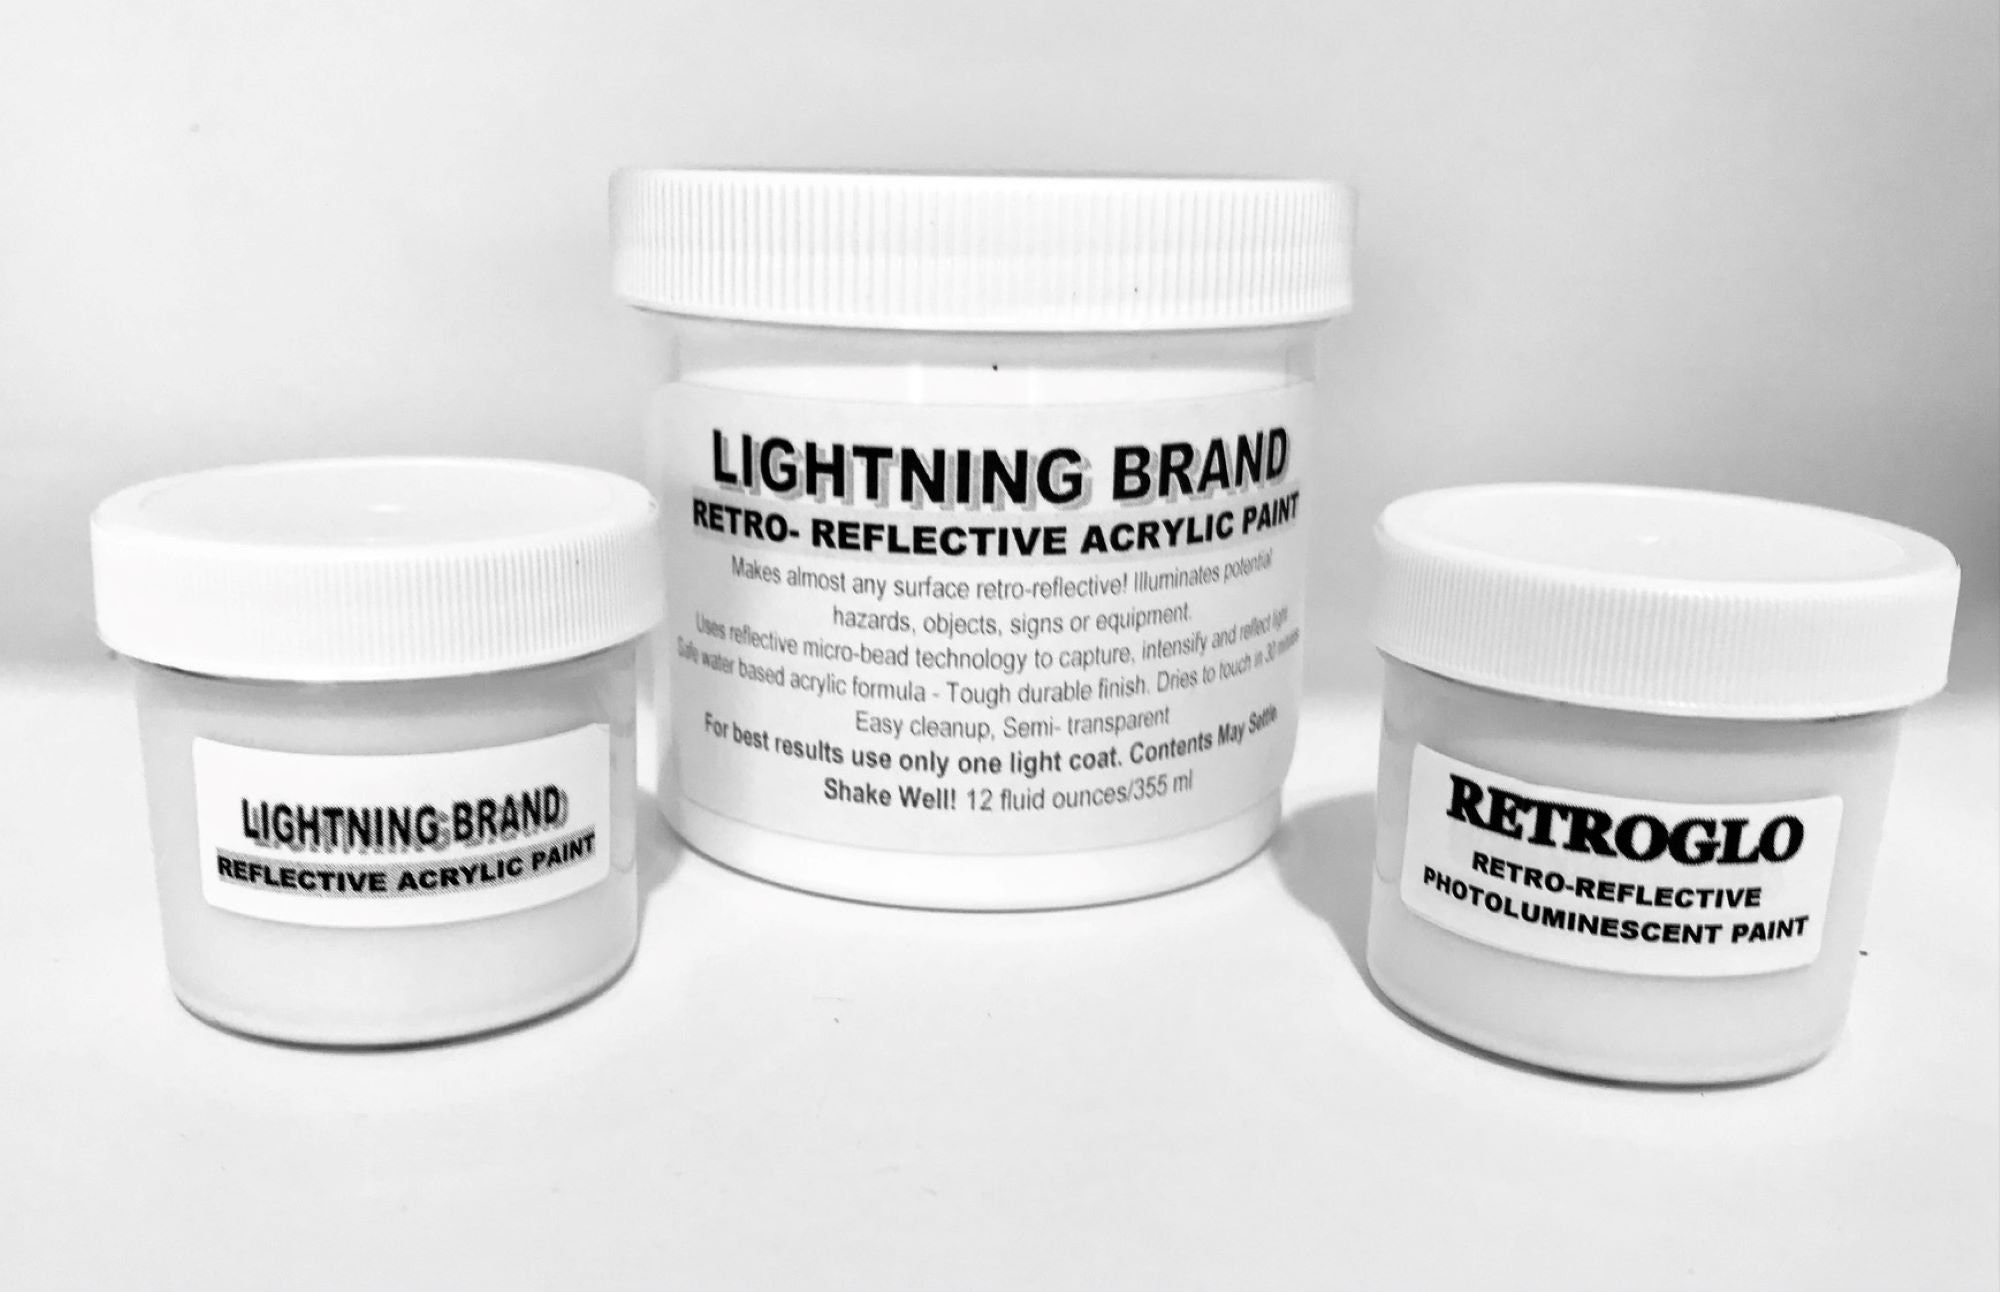 Lightning Brand Reflective Paint and RETROGLO 